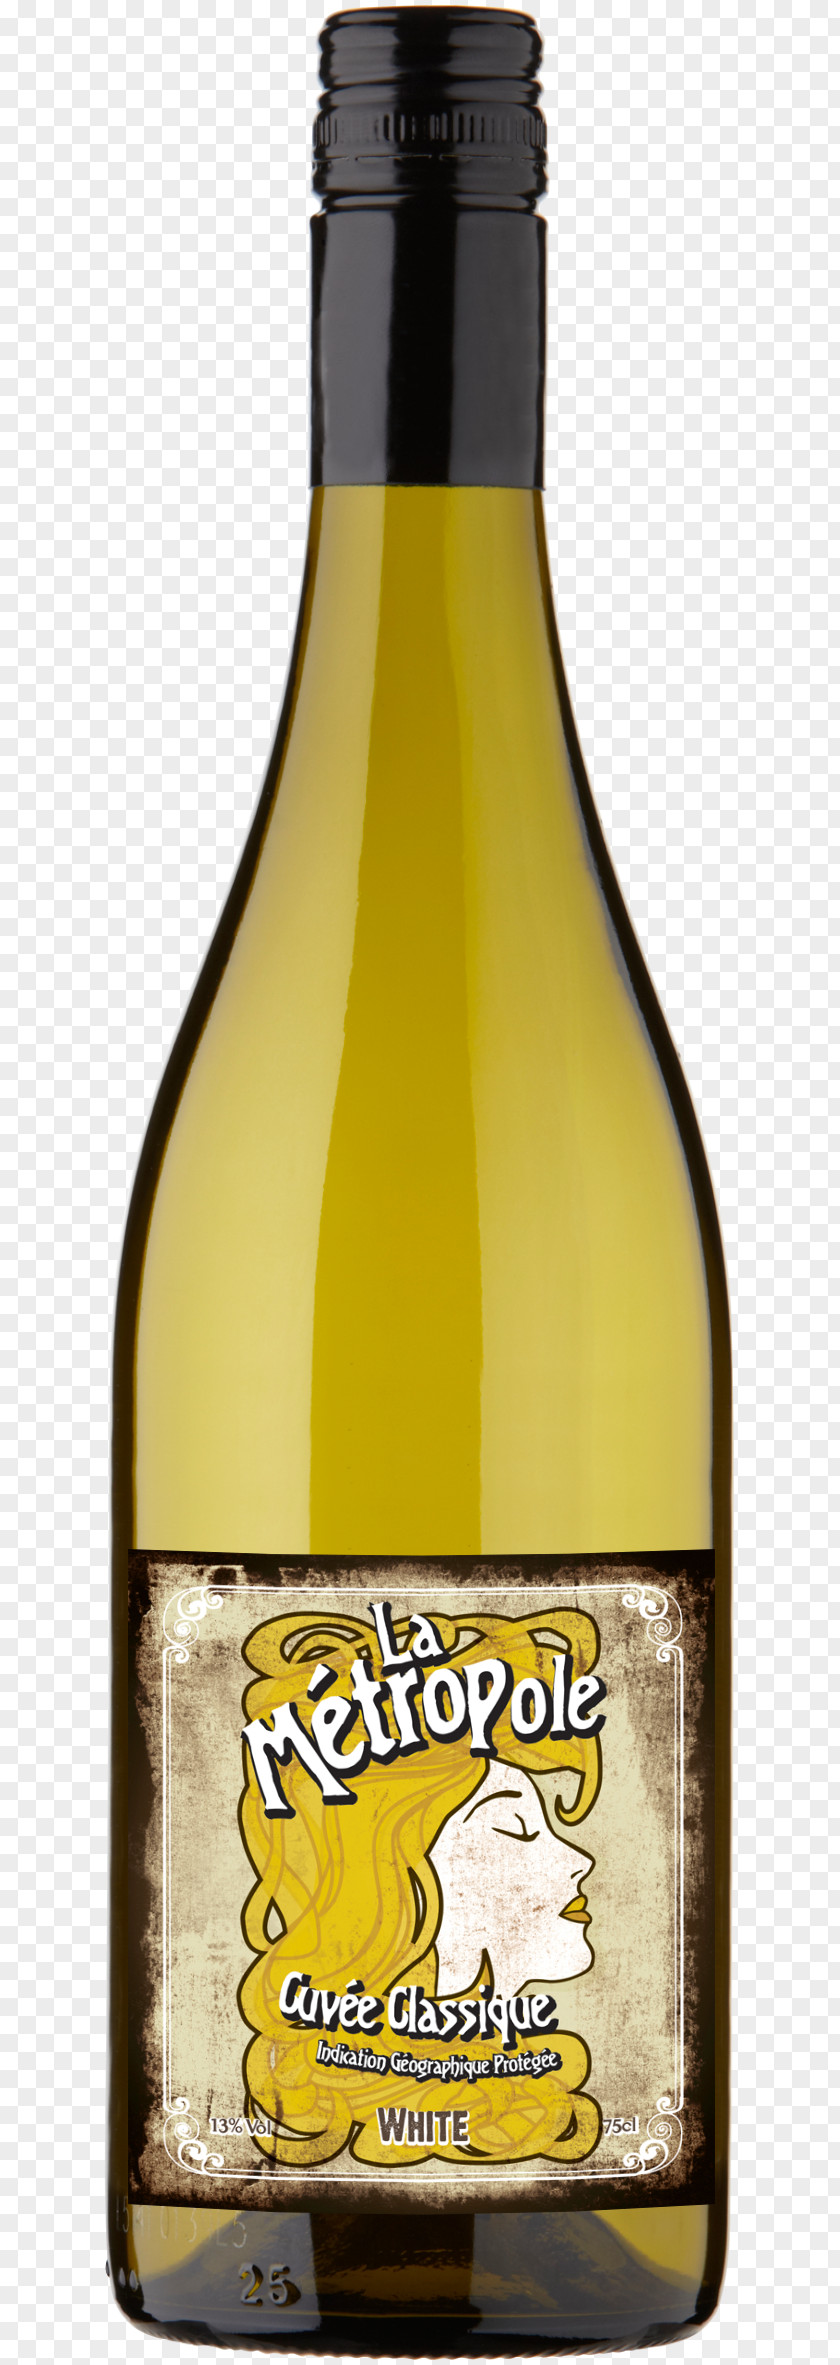 Vintage Wine Grapes France Chardonnay White Sauvignon Blanc Cabernet PNG